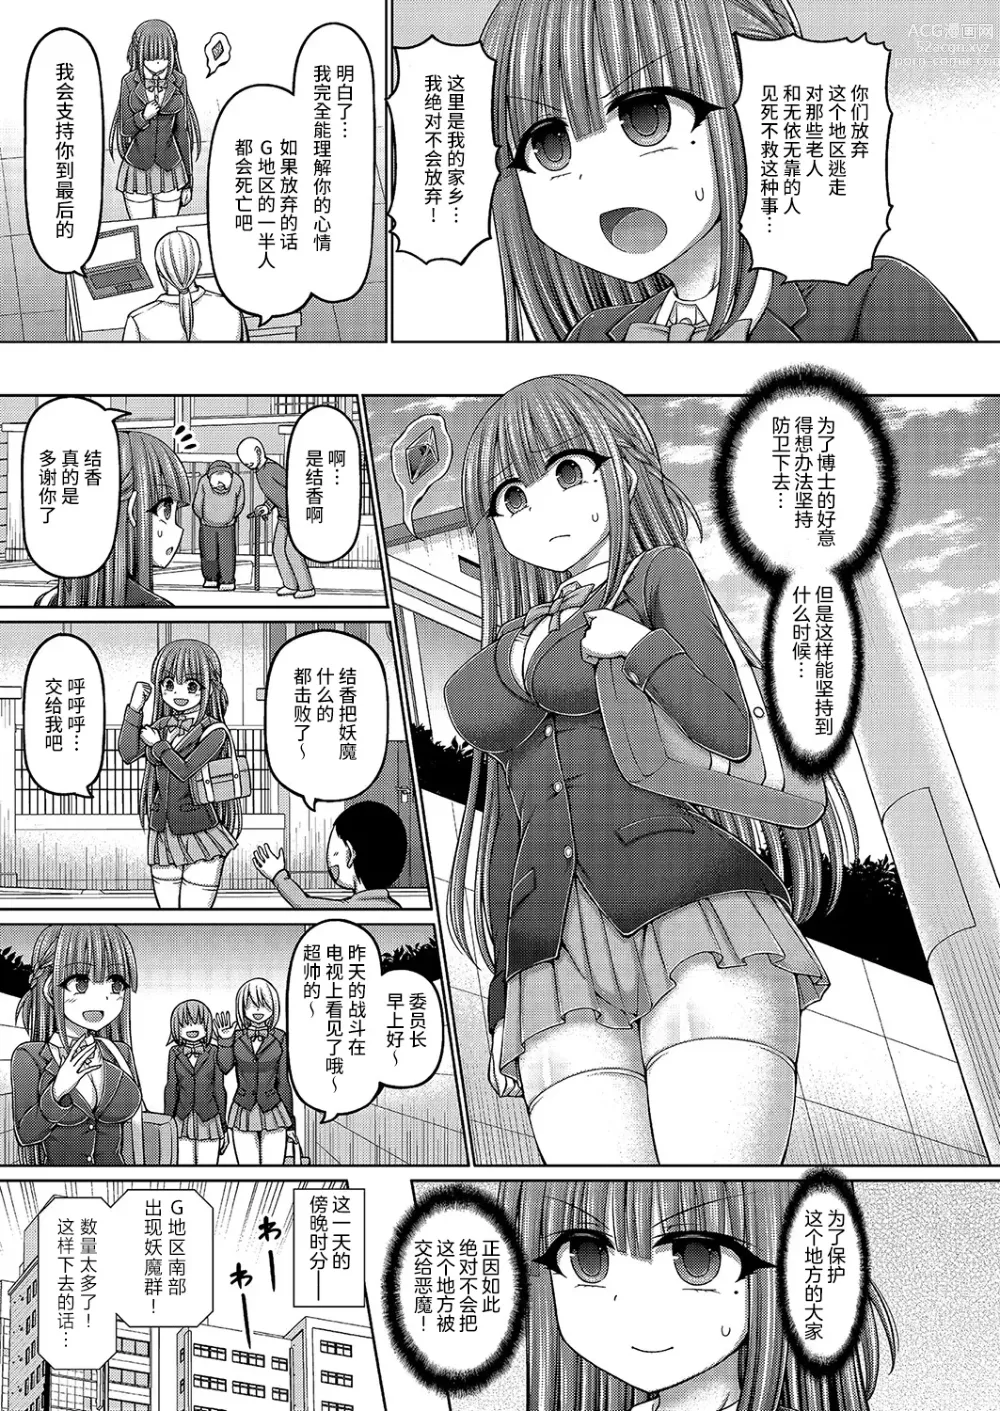 Page 3 of manga Jewel Miko Sakuraji Yuka